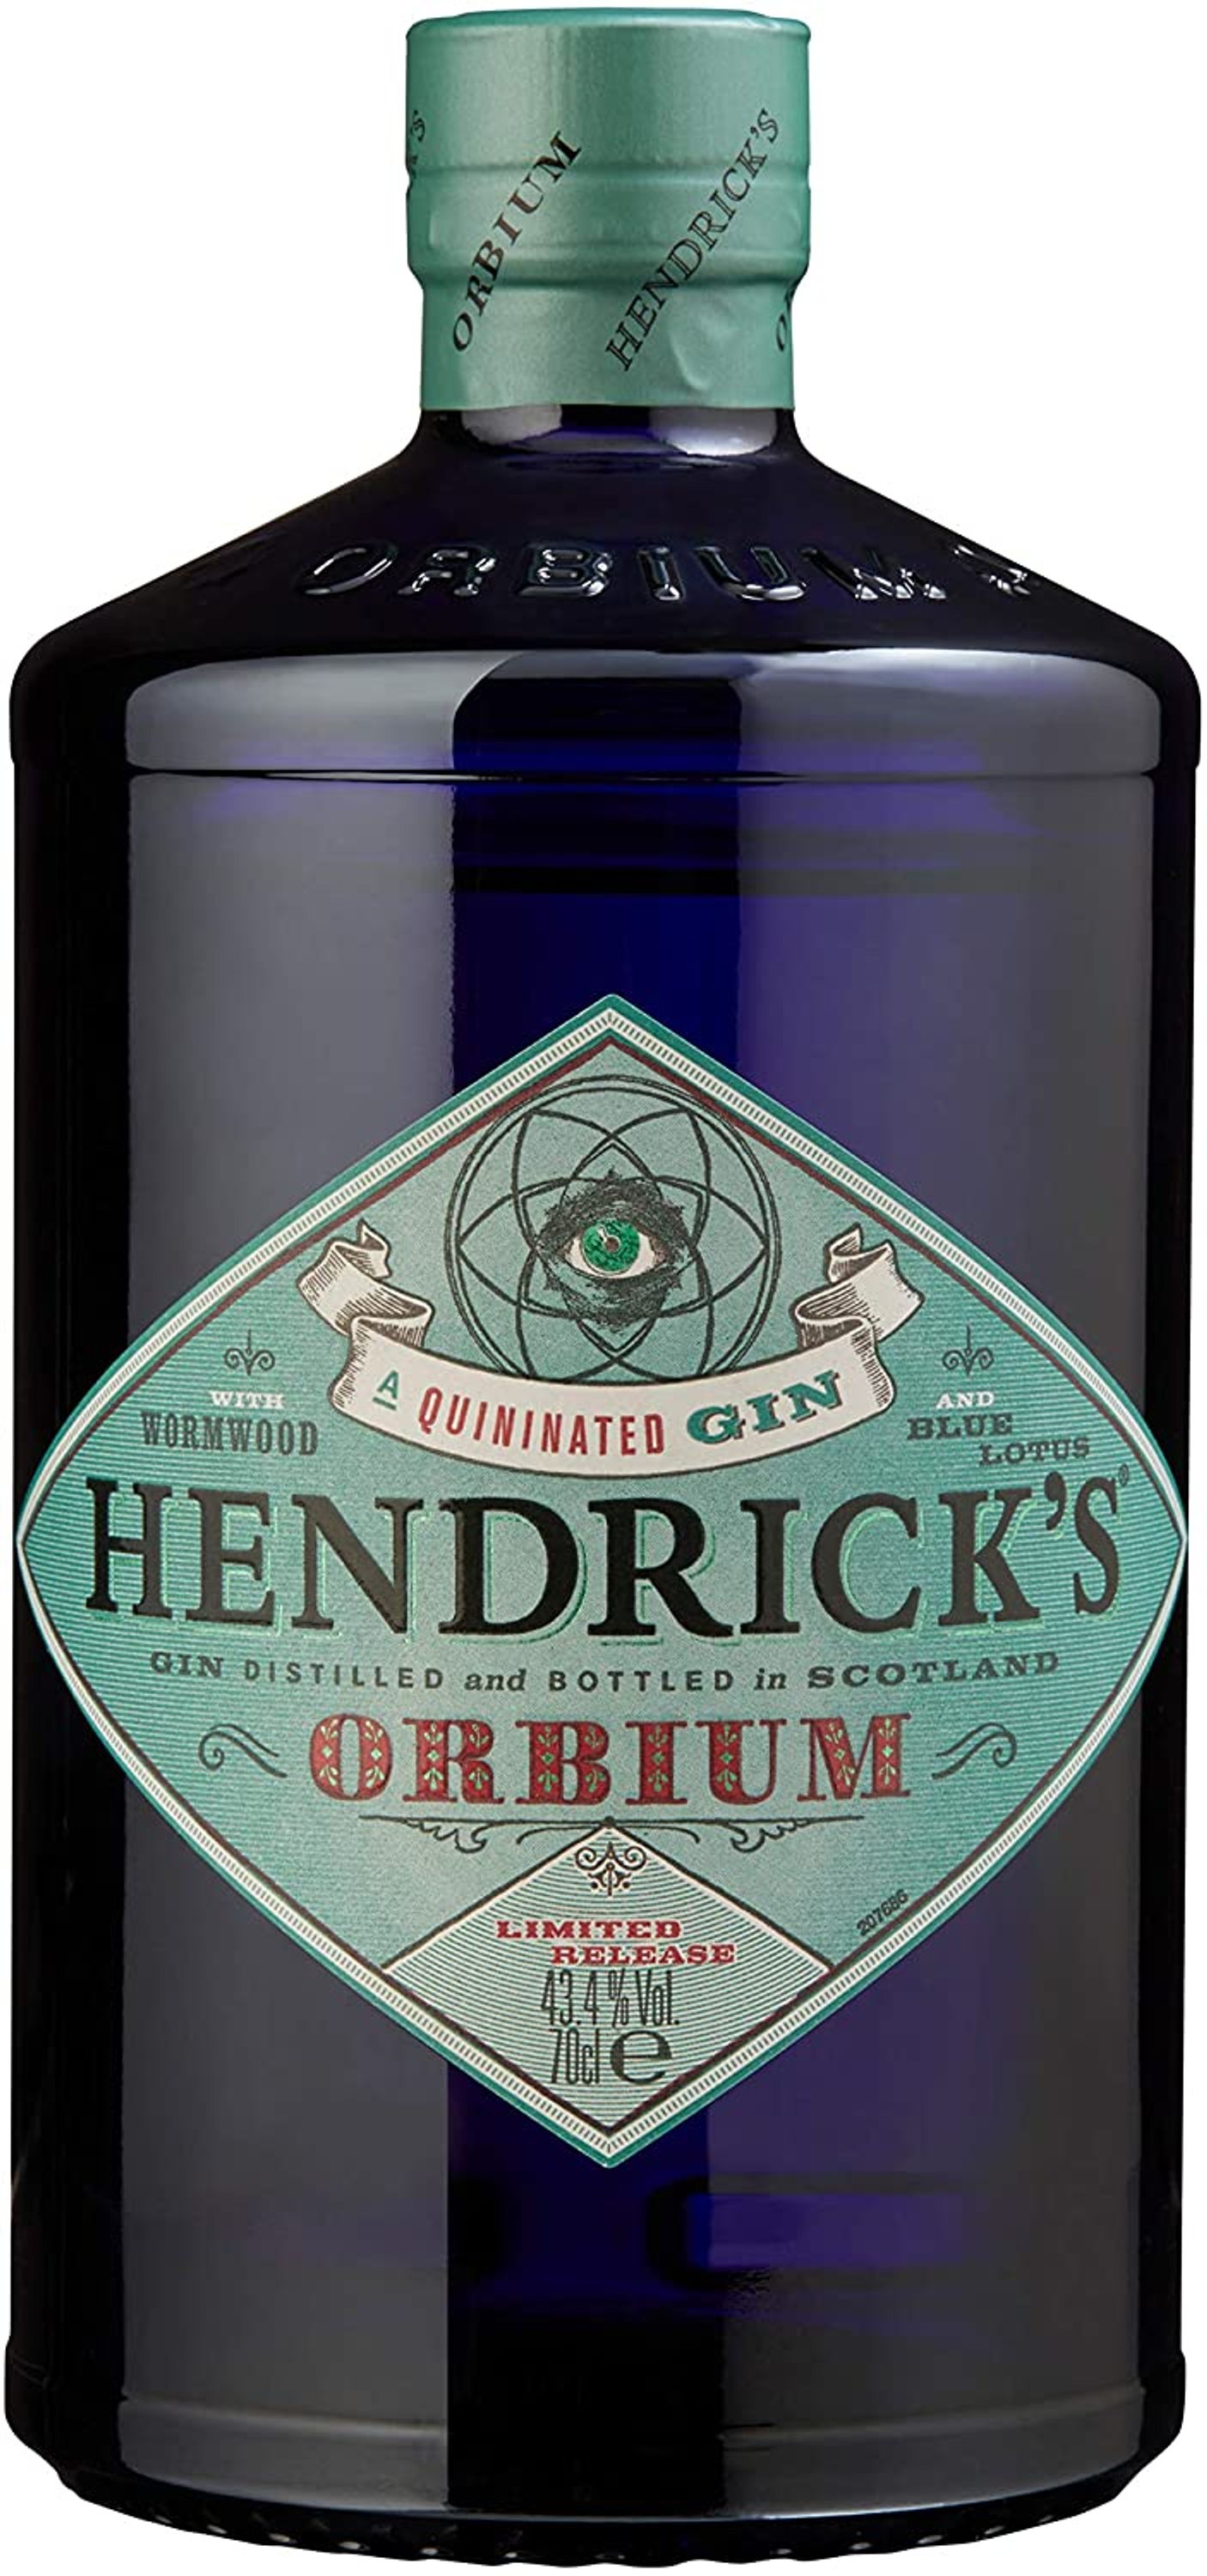 Hendrick's Orbium Gin 0.7l, alc. 43.4% ABV, Gin Scotland